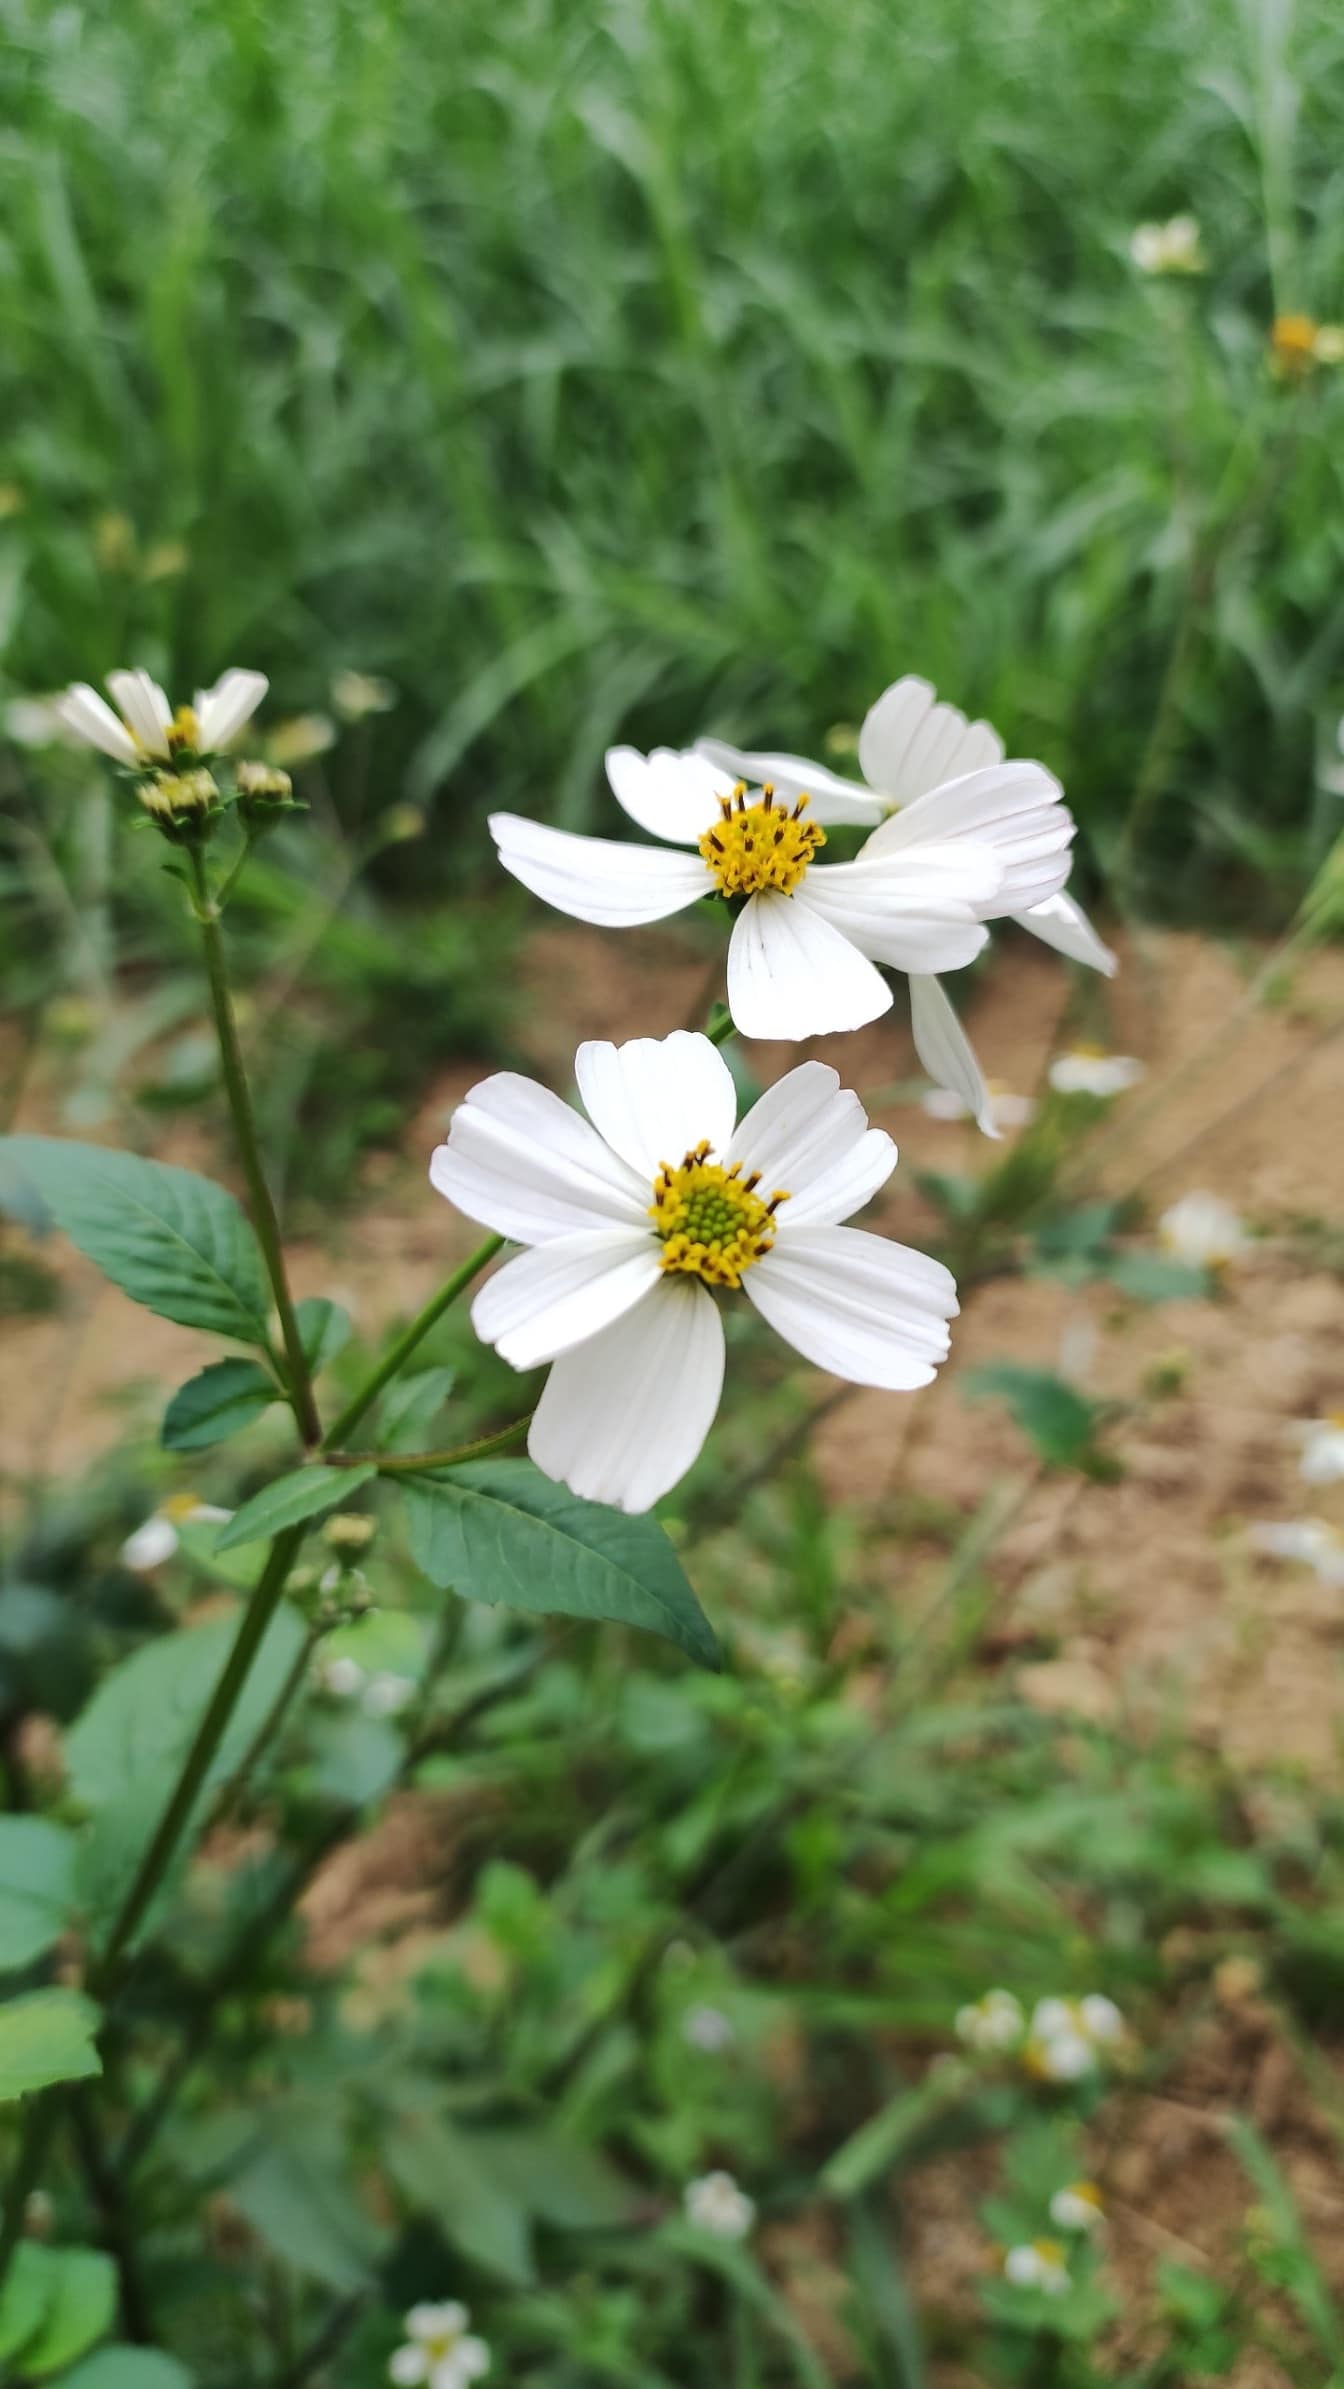 Witte bloem (Bidens alba) wilde bloem in grasweide in de lentetijd